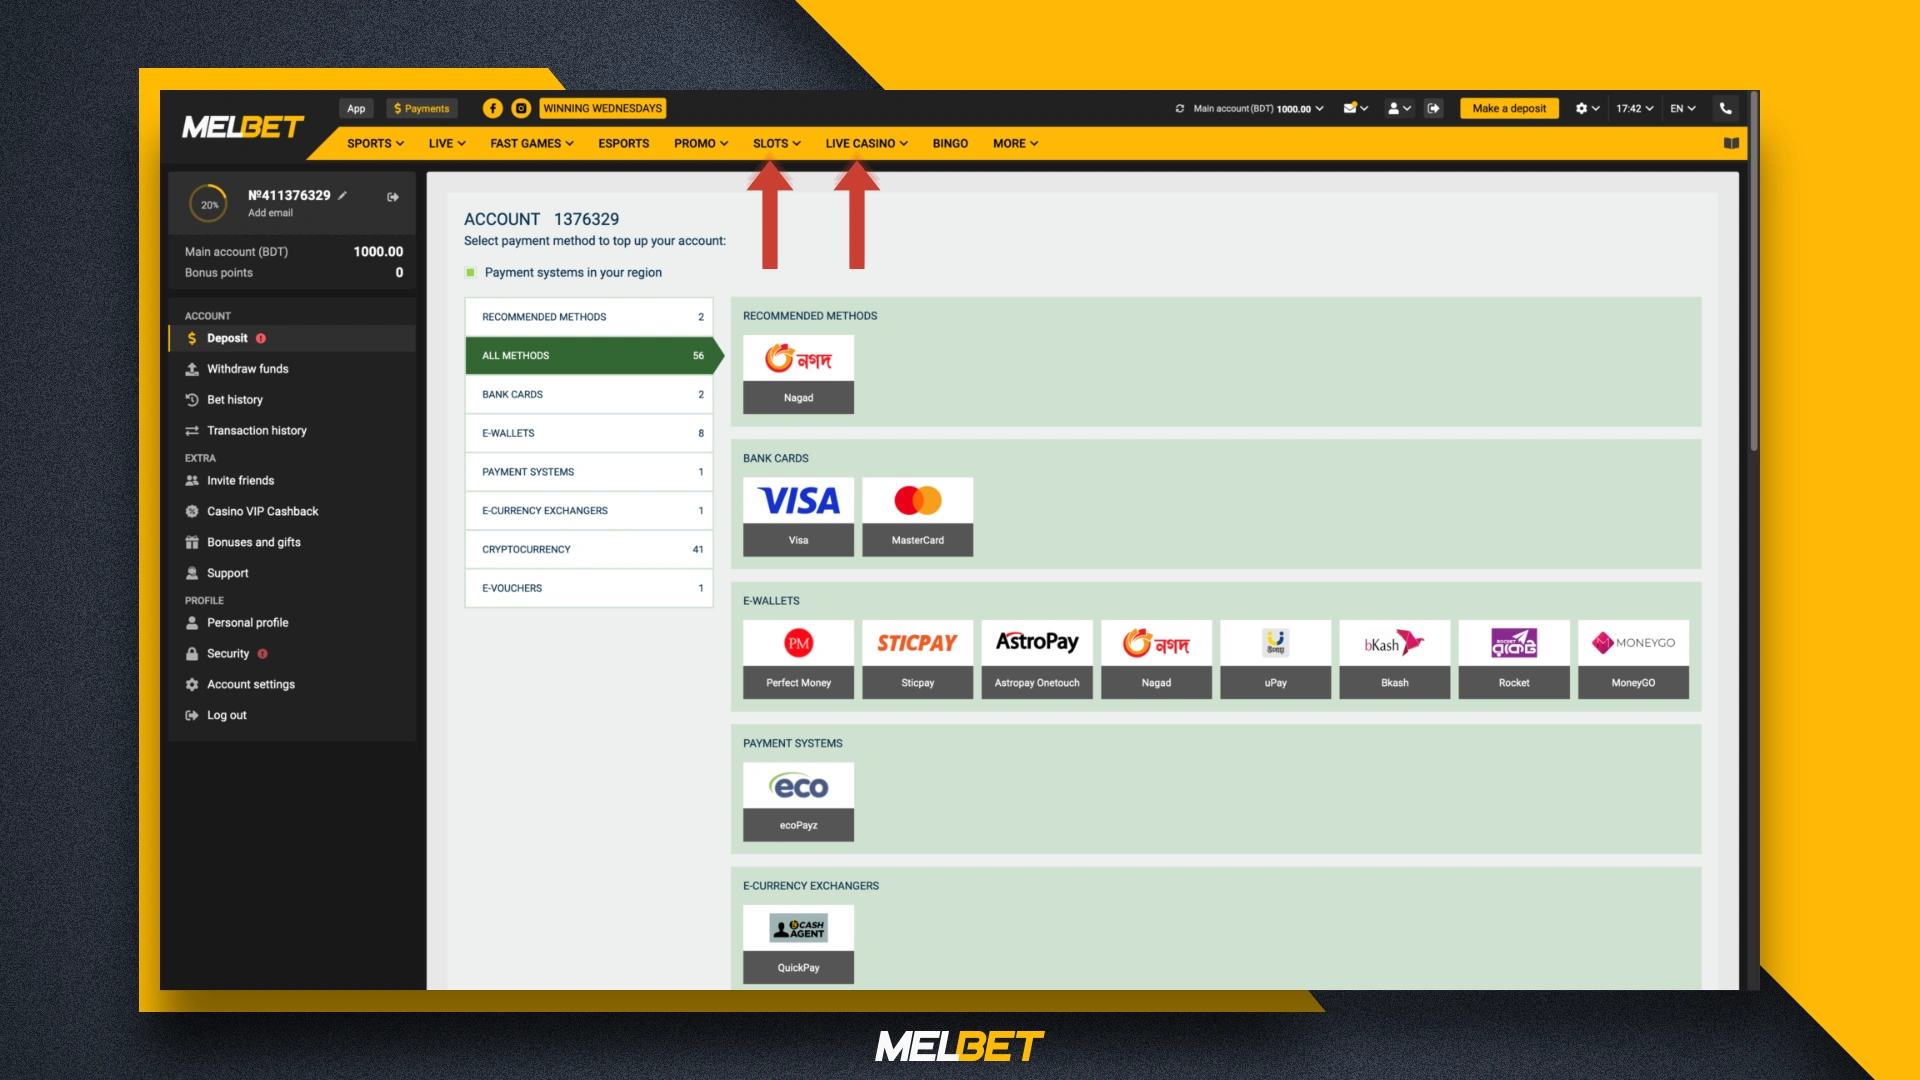 Melbet Bangladesh payment methods page